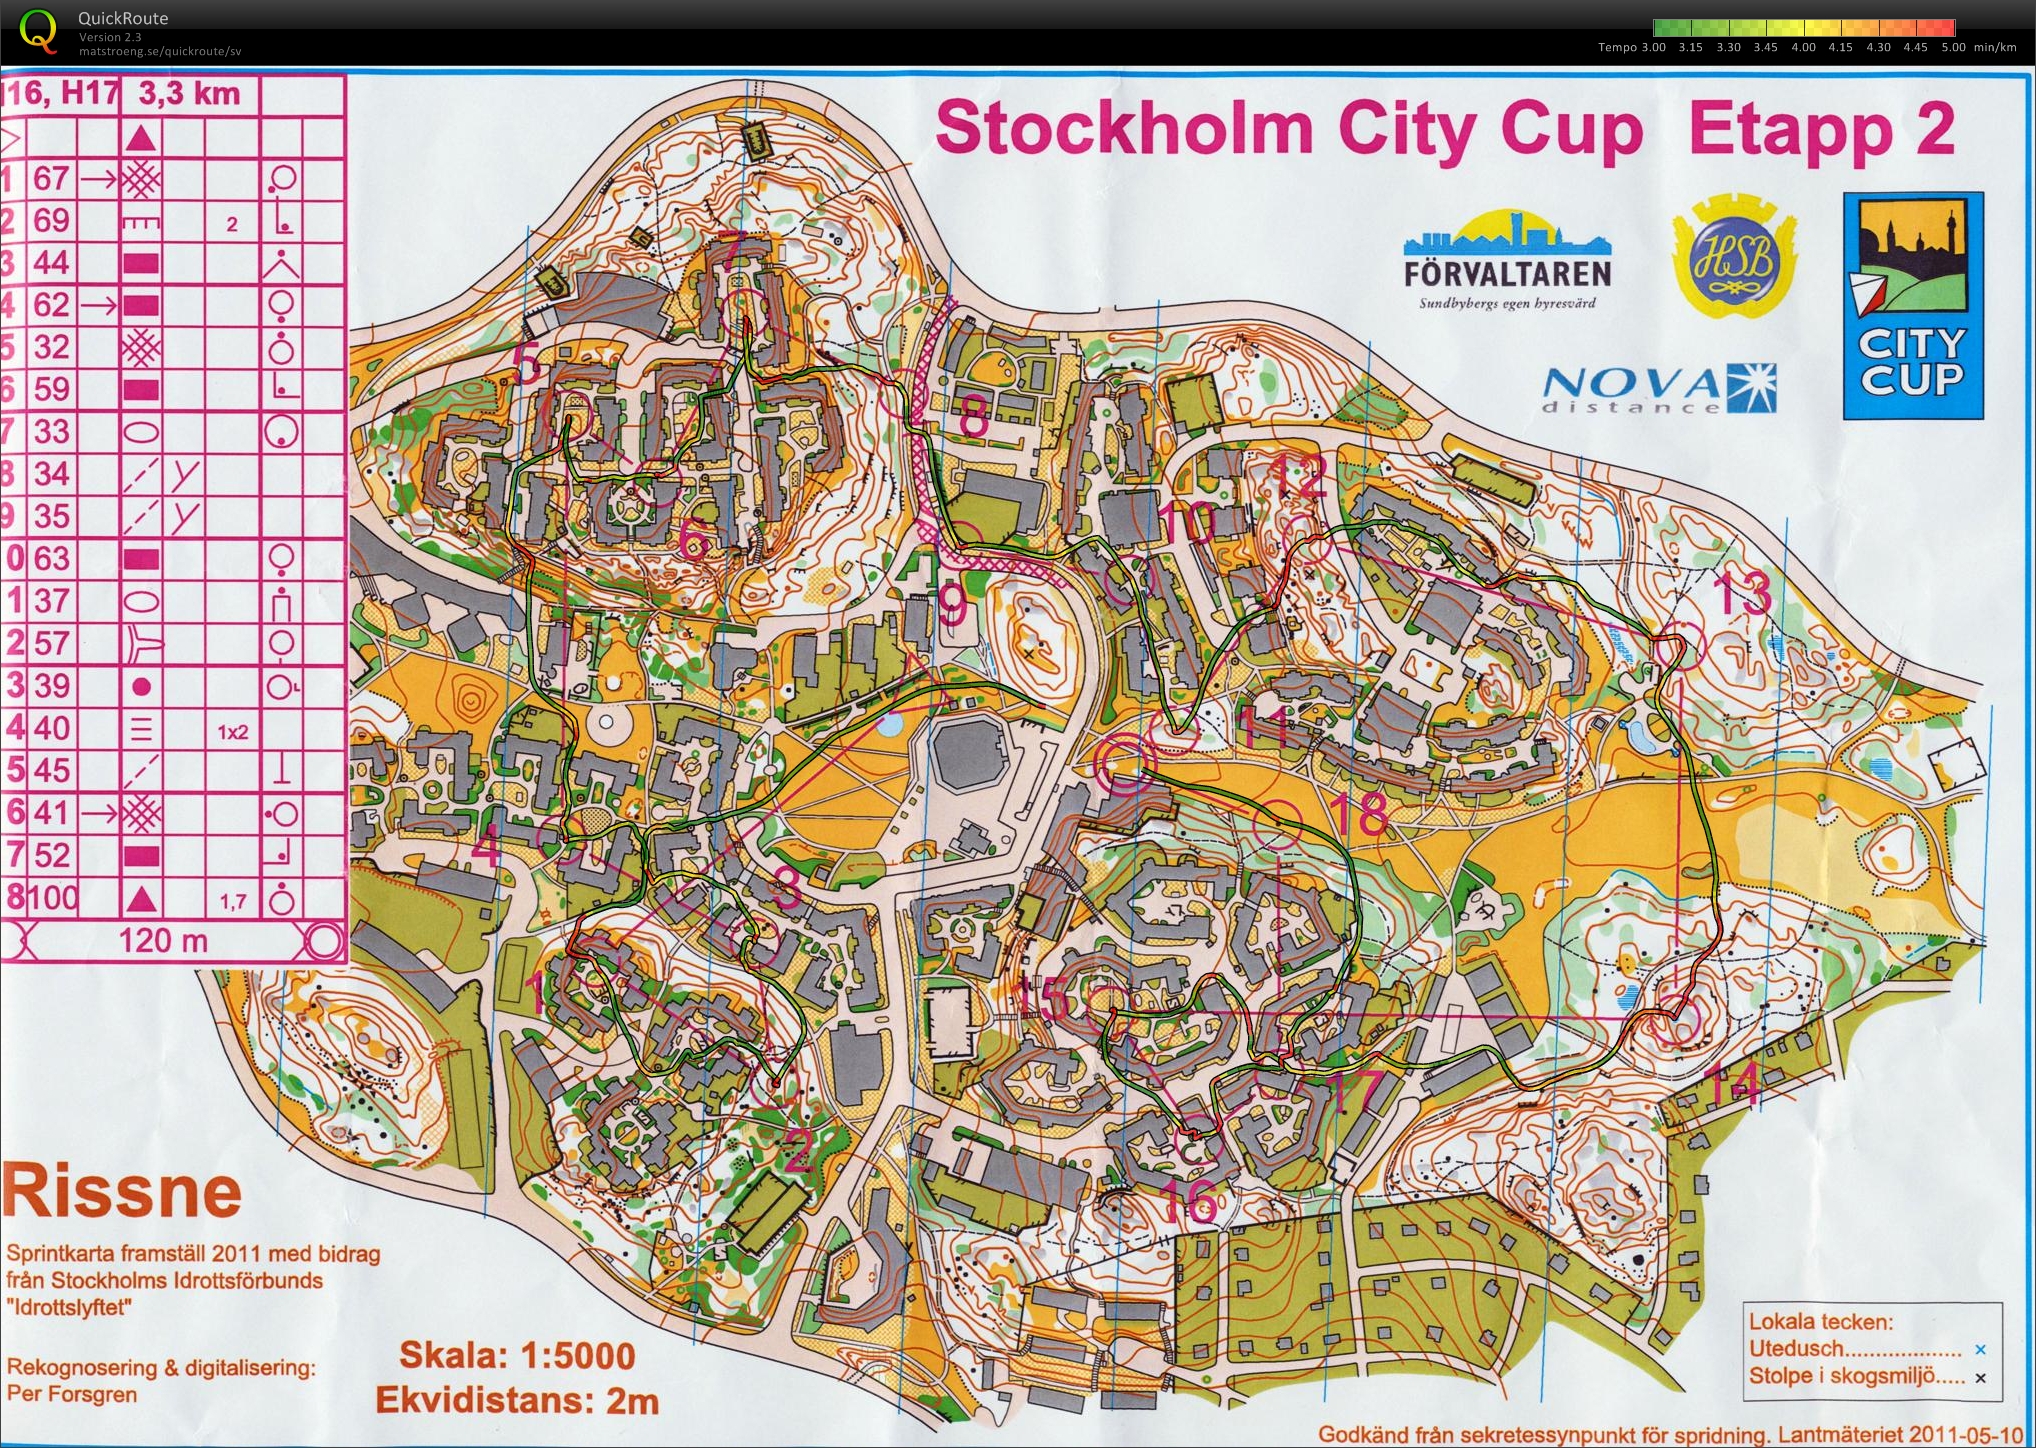 Stockholm City Cup etapp 2 (18-05-2011)